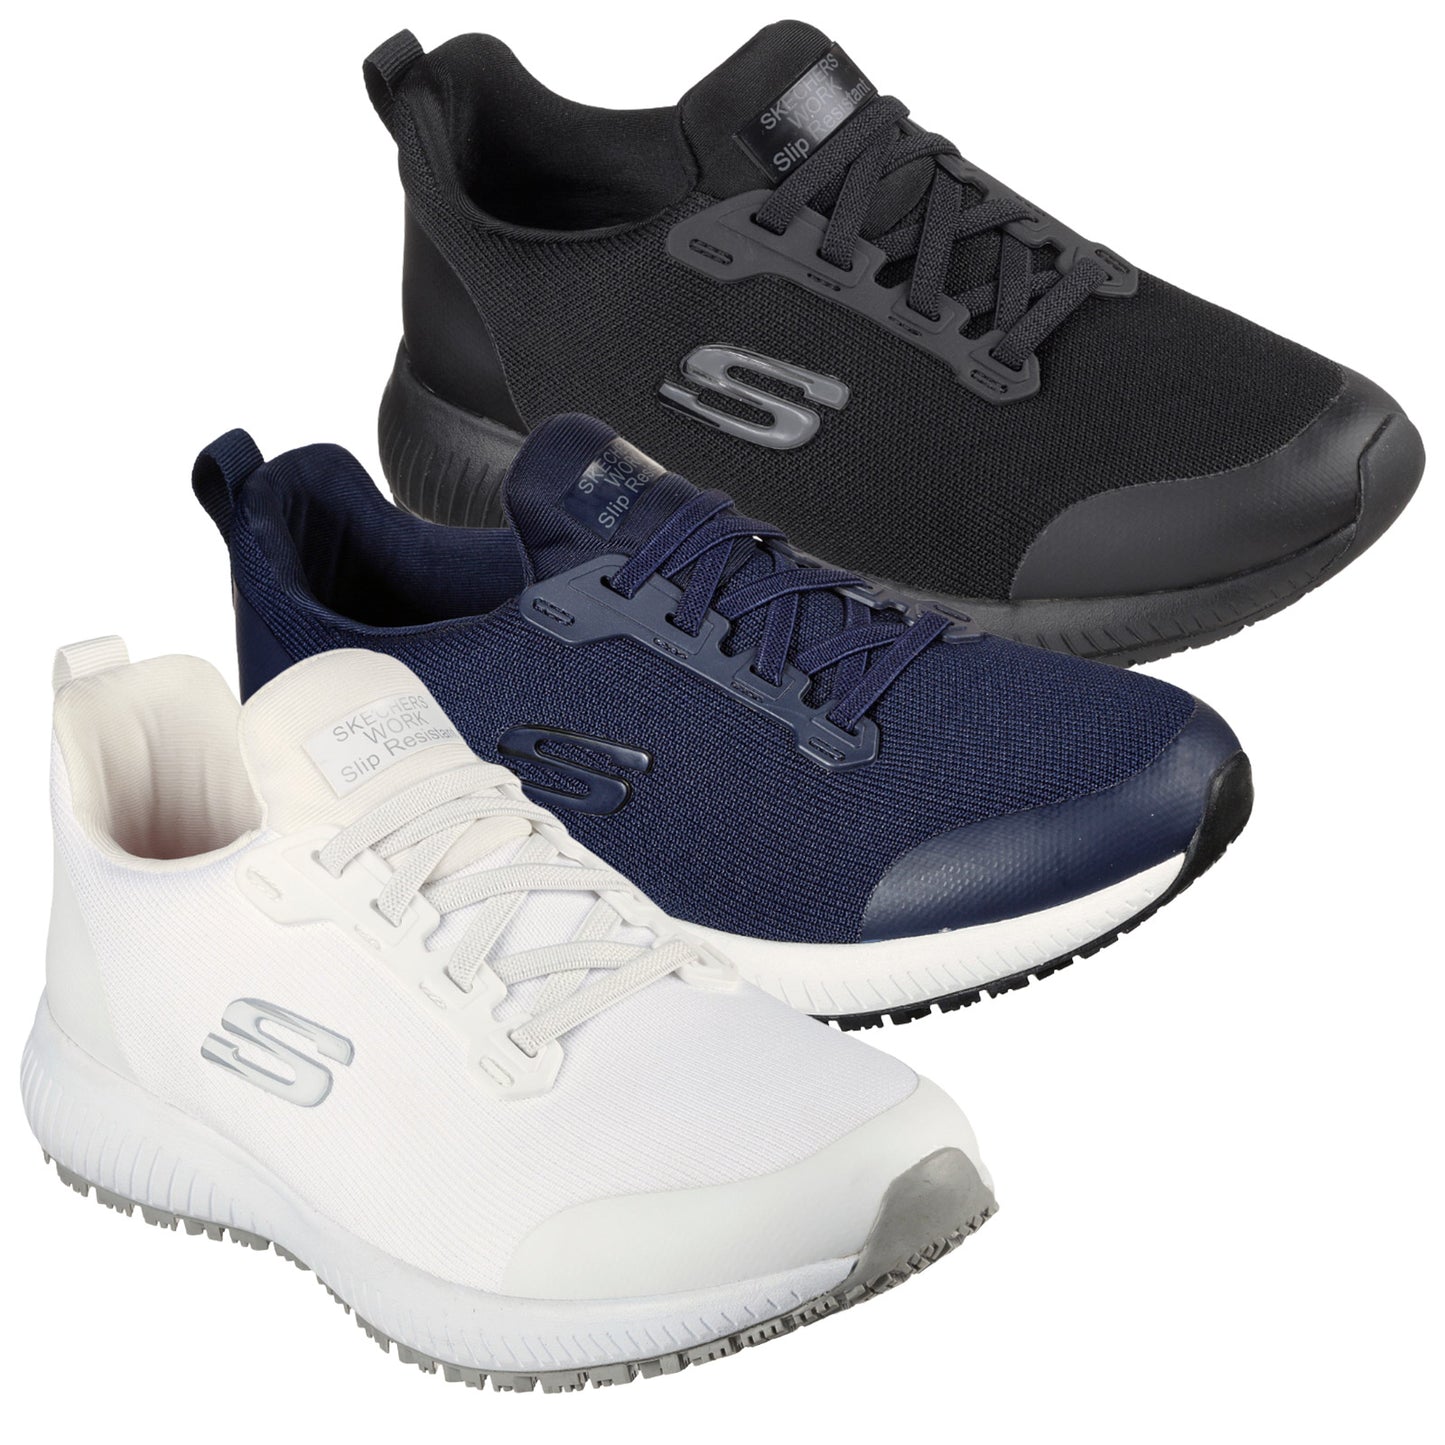 Skechers Ladies Squad Slip-Resistant Work Shoes